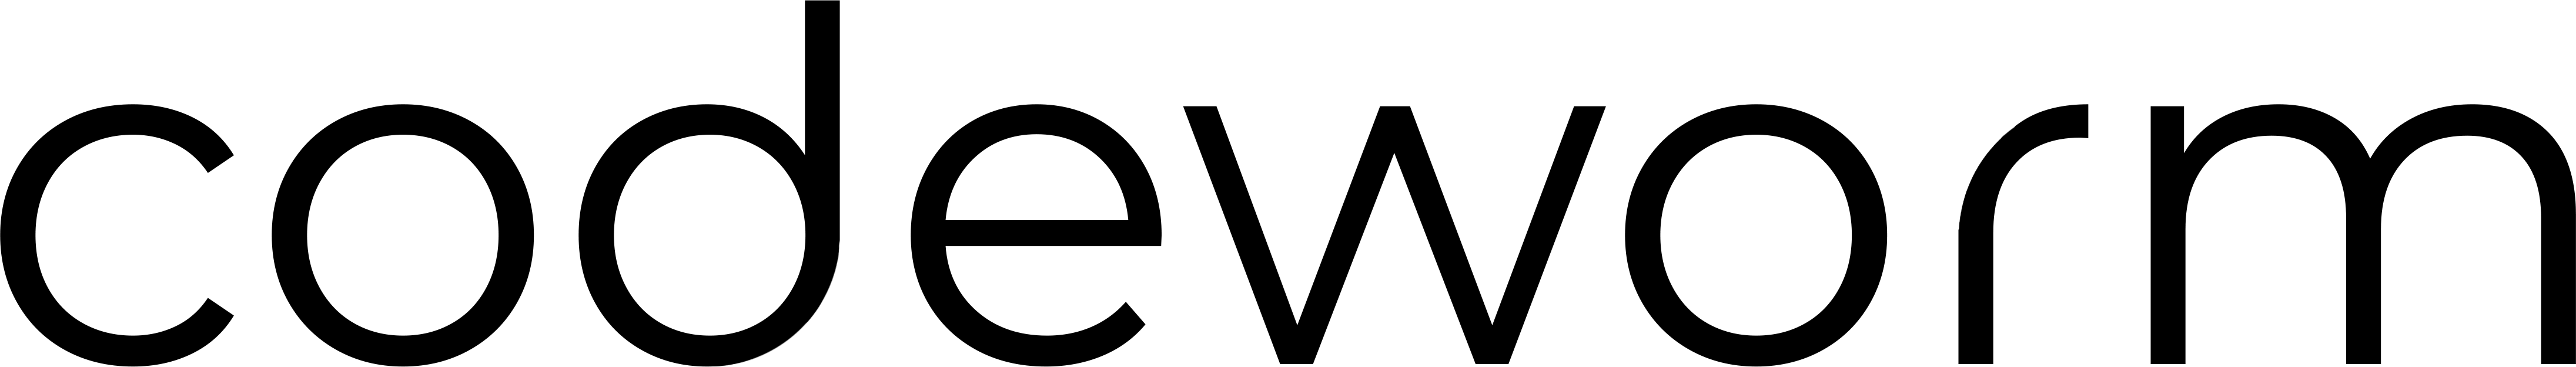 Codeworm logo